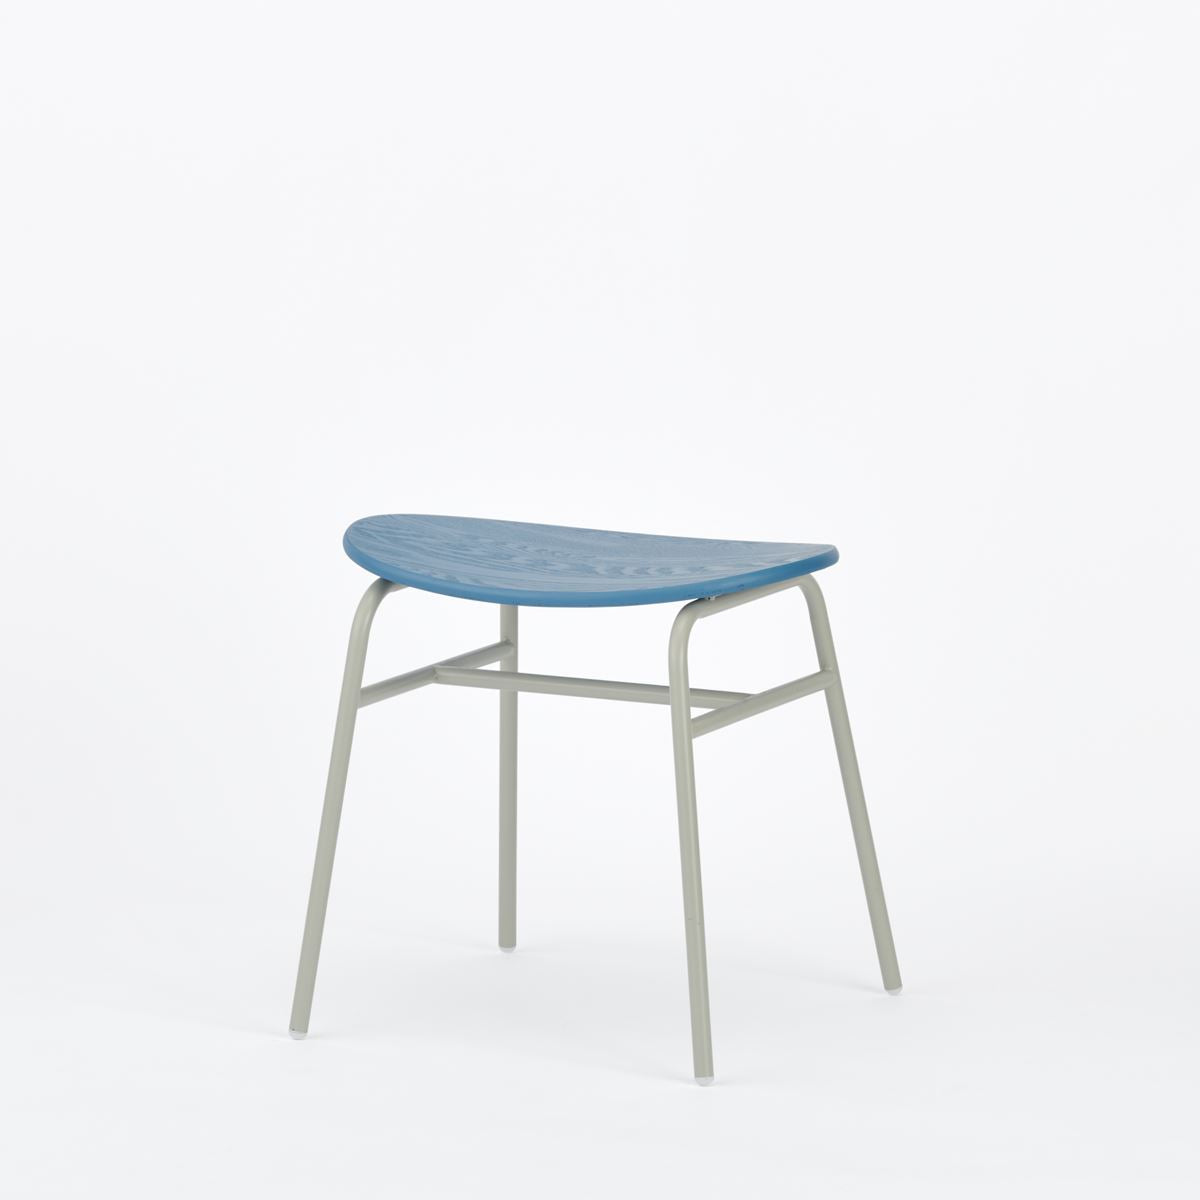 KUUM Stool kinoco - Gray White Steel Frame/Colored Wooden Seat / クーム  スツール キノコ